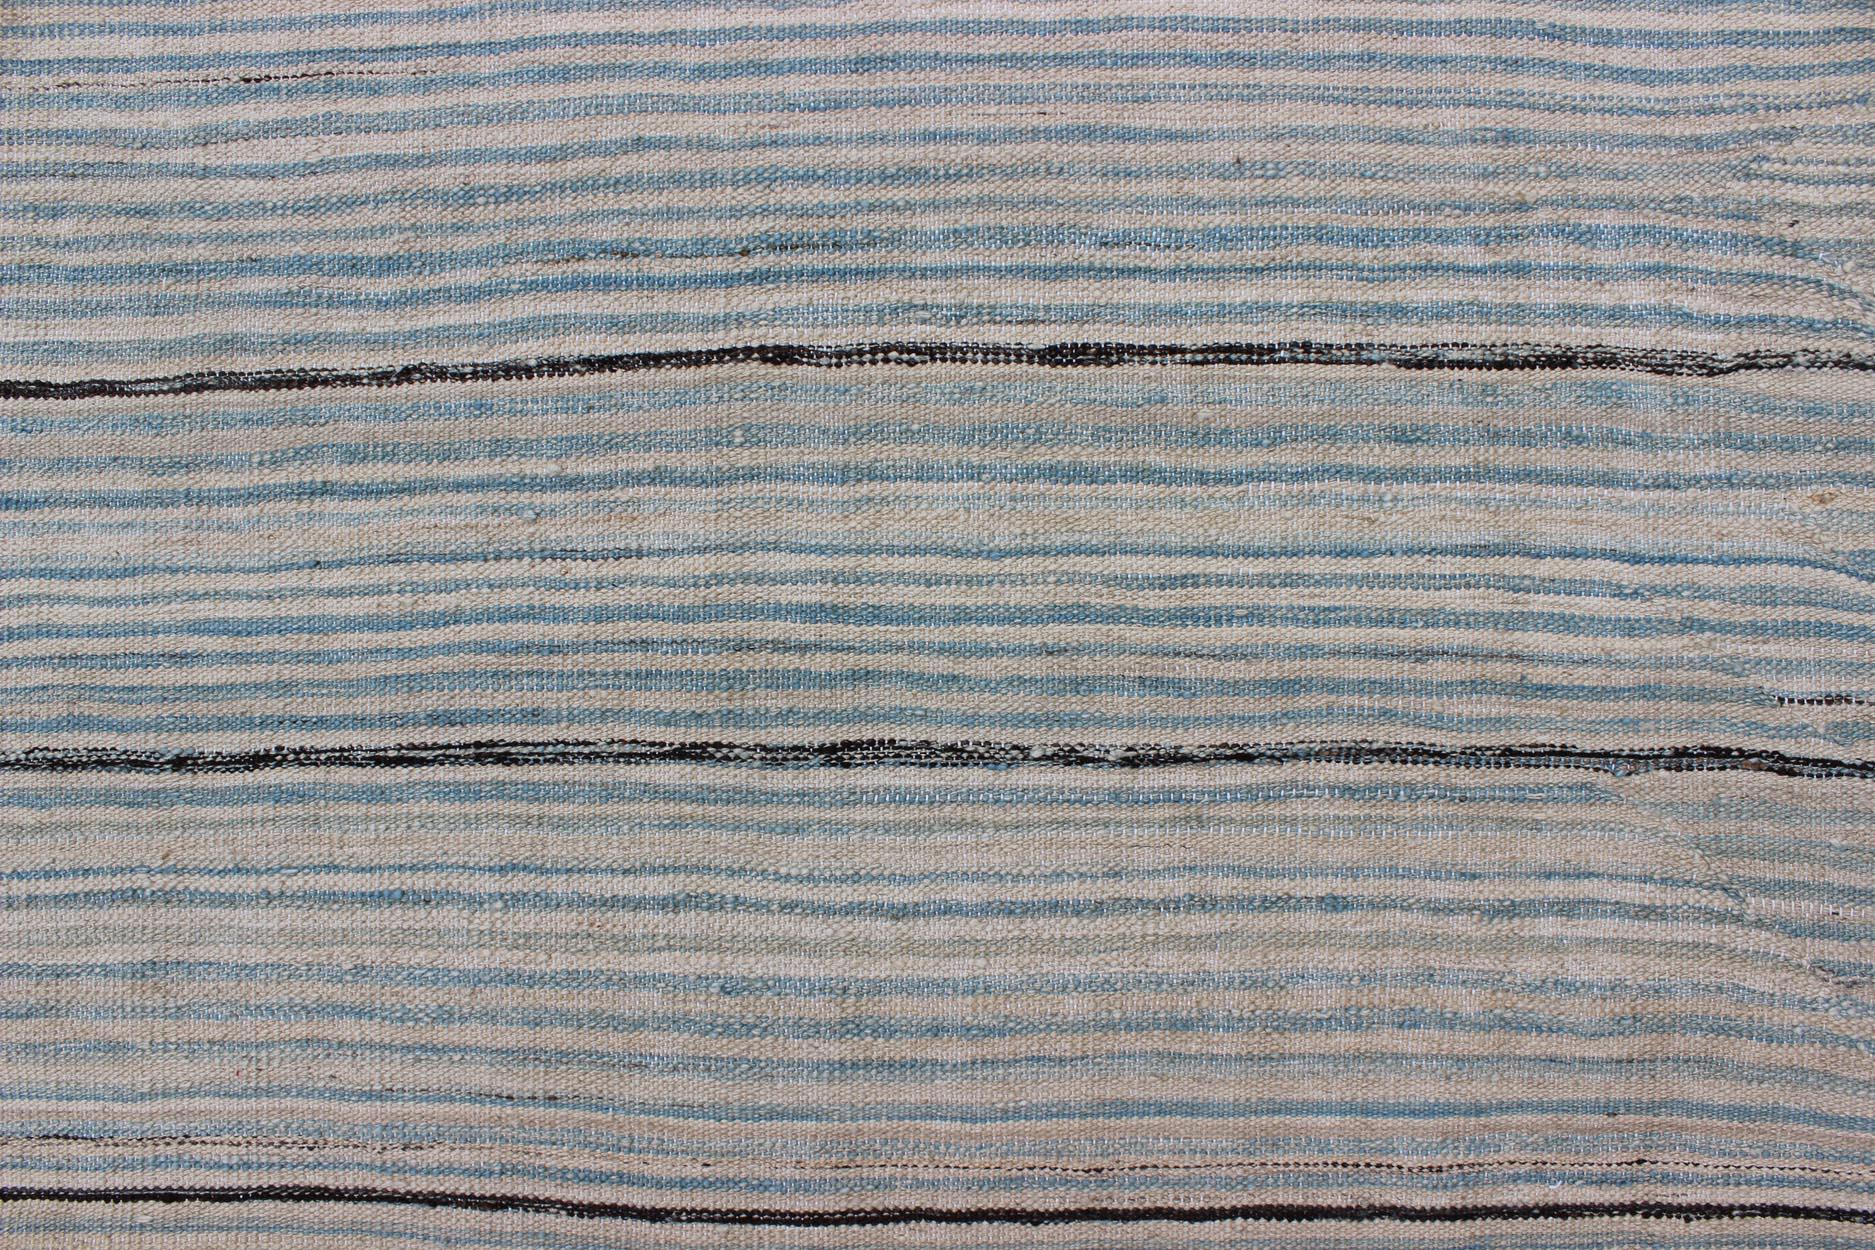 Wool Modern Flat-Weave Kilim Rug in Three Panel Striped Design in Ocean Blue & Taupe